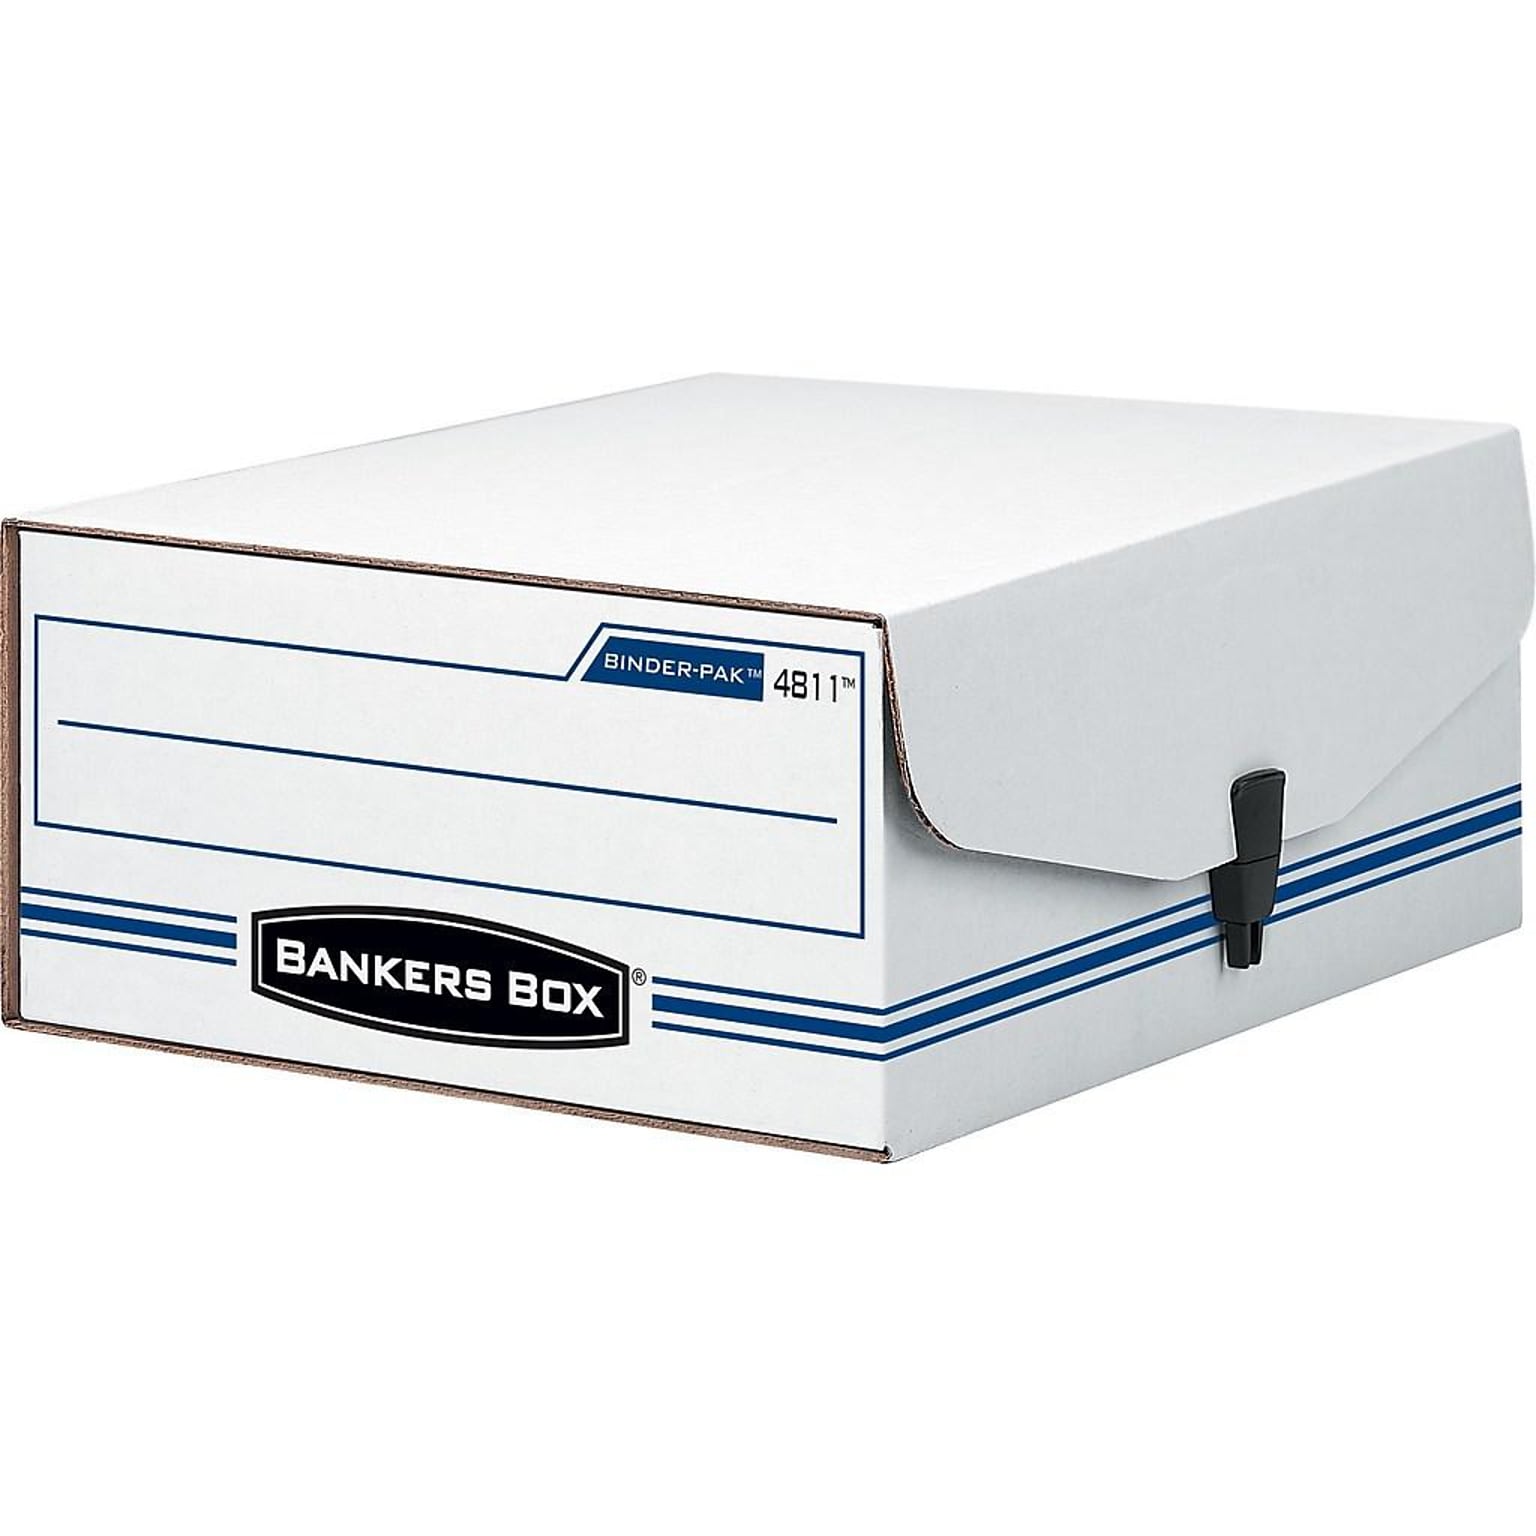 Bankers Box Liberty Binder-Pak Corrugated File Storage Box, Snap Closure, Check & Voucher Size, White/Blue (48110)